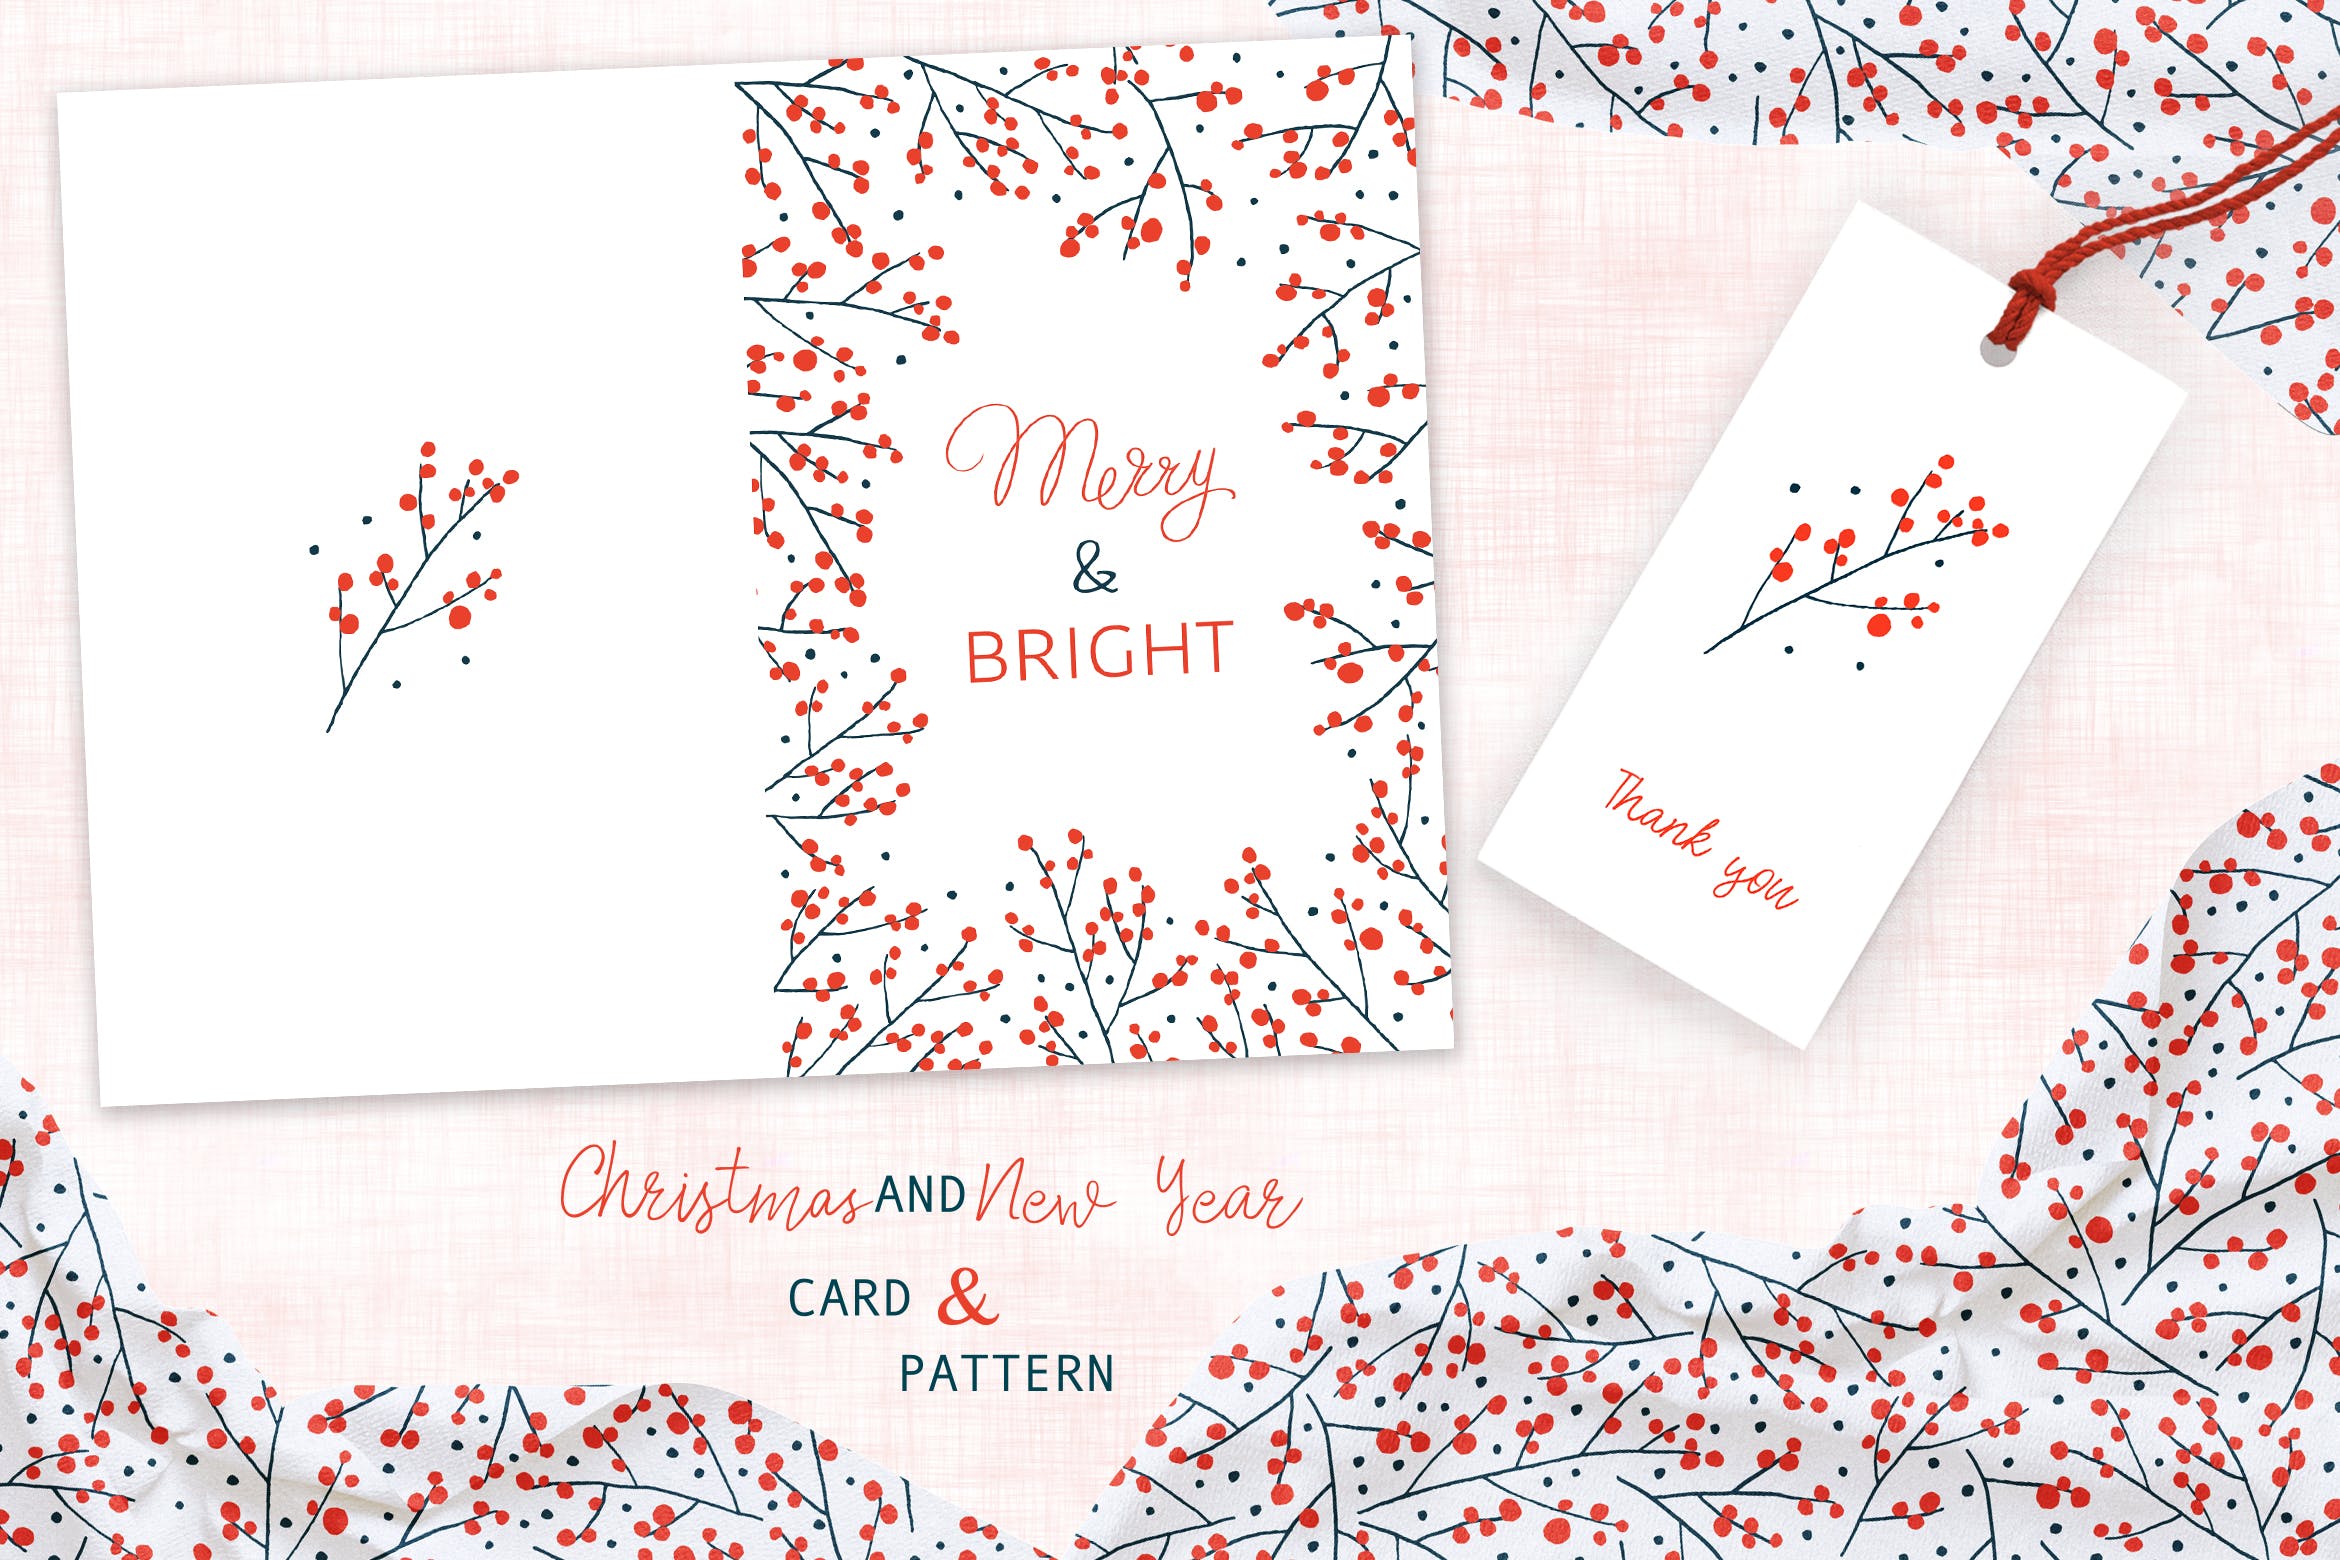 圣诞枝手绘图案背景素材/贺卡设计模板 Christmas Branches Greeting Card and Pattern插图